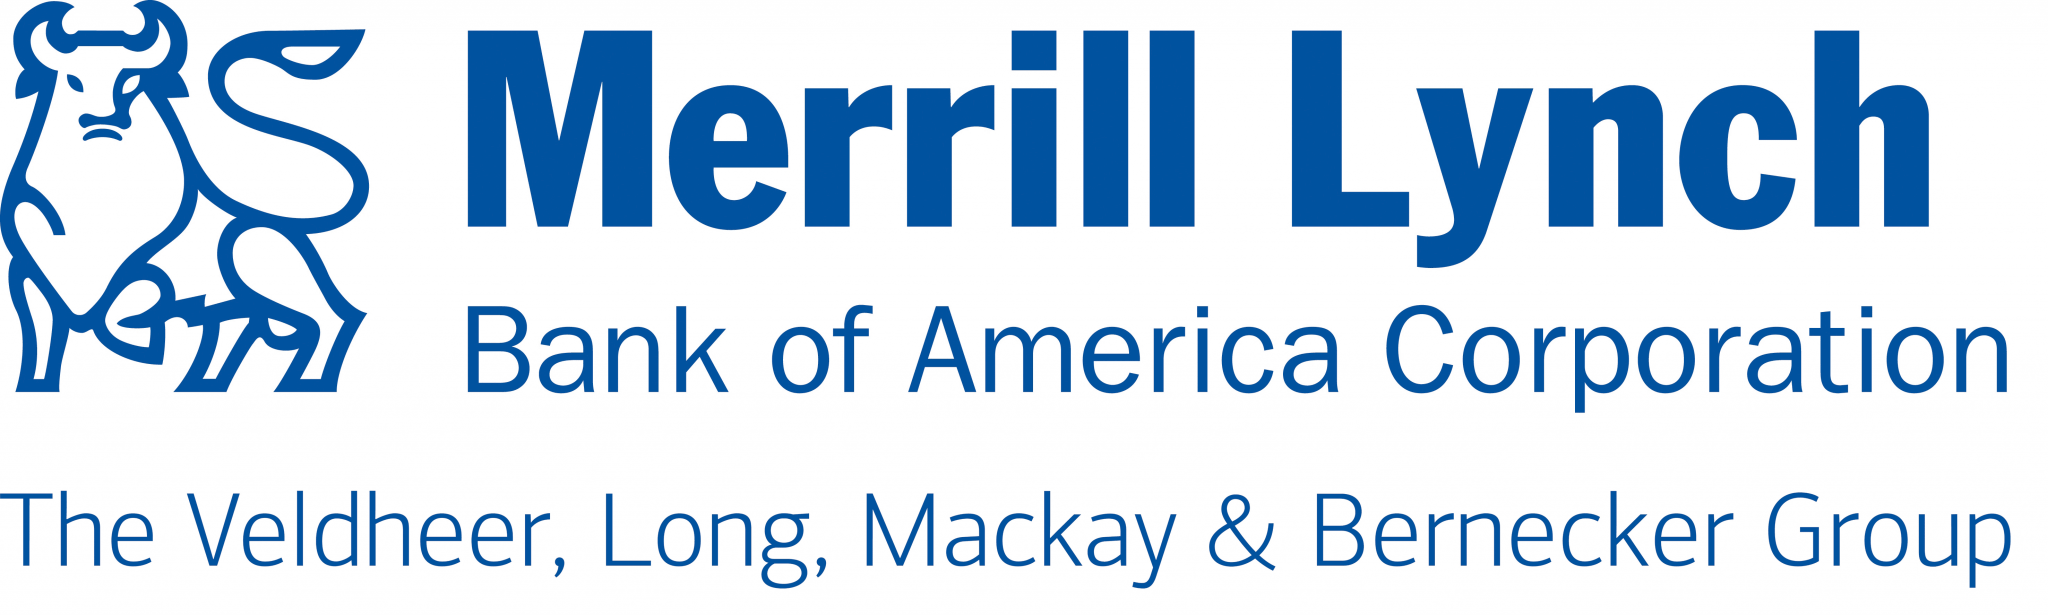 Merrill Lynch Logo - Merrill Lynch Logo - Metro Health Hospital Metro Health